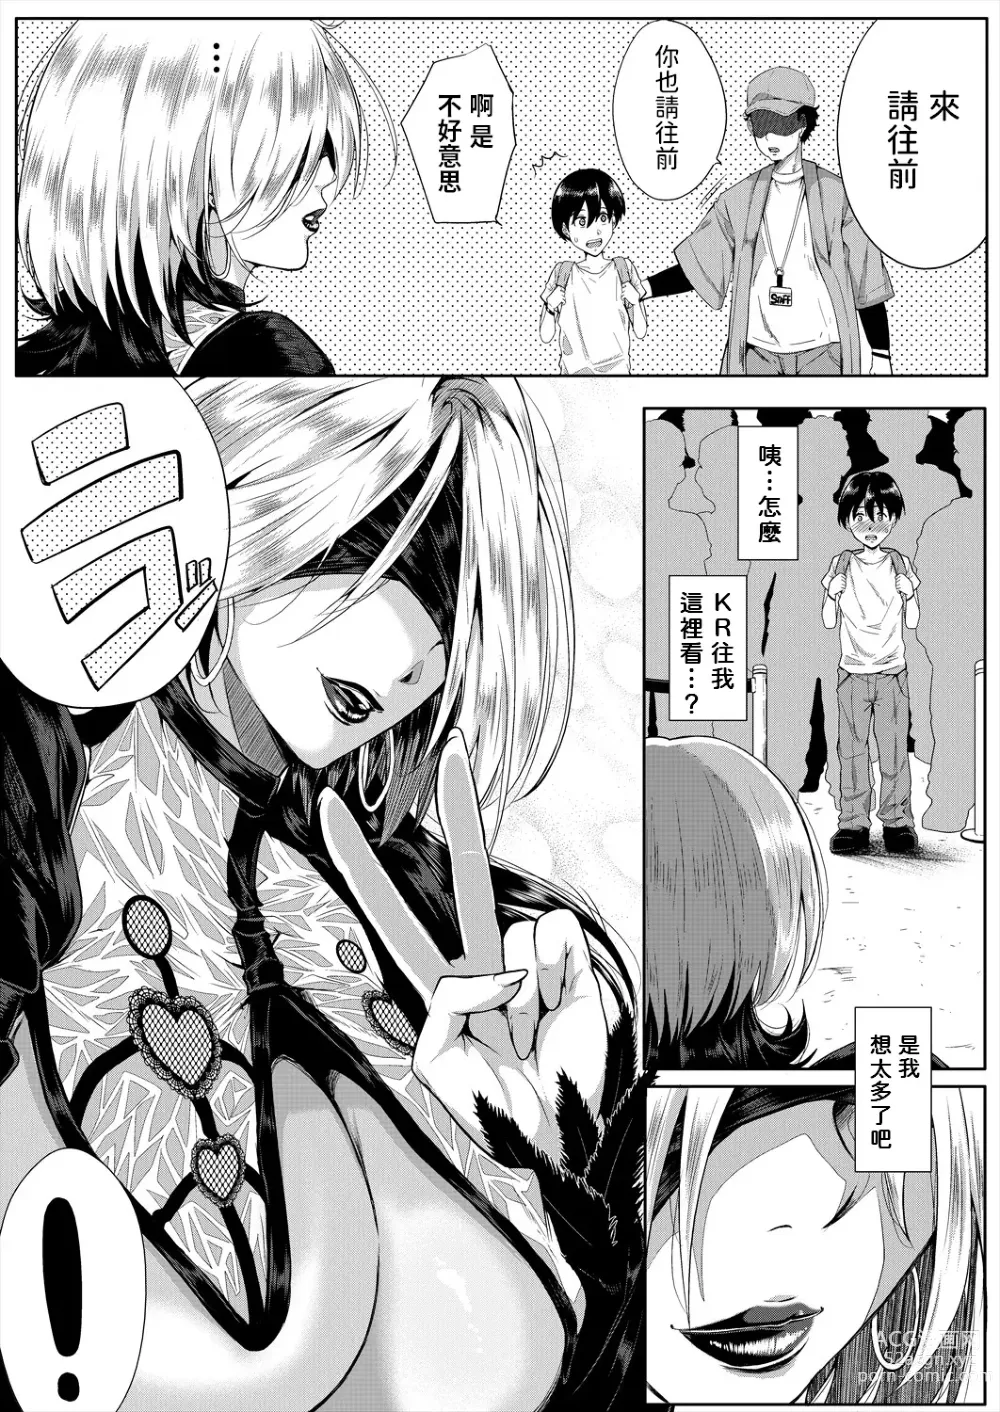 Page 9 of manga Strawberry Mermaid 2nd Dive